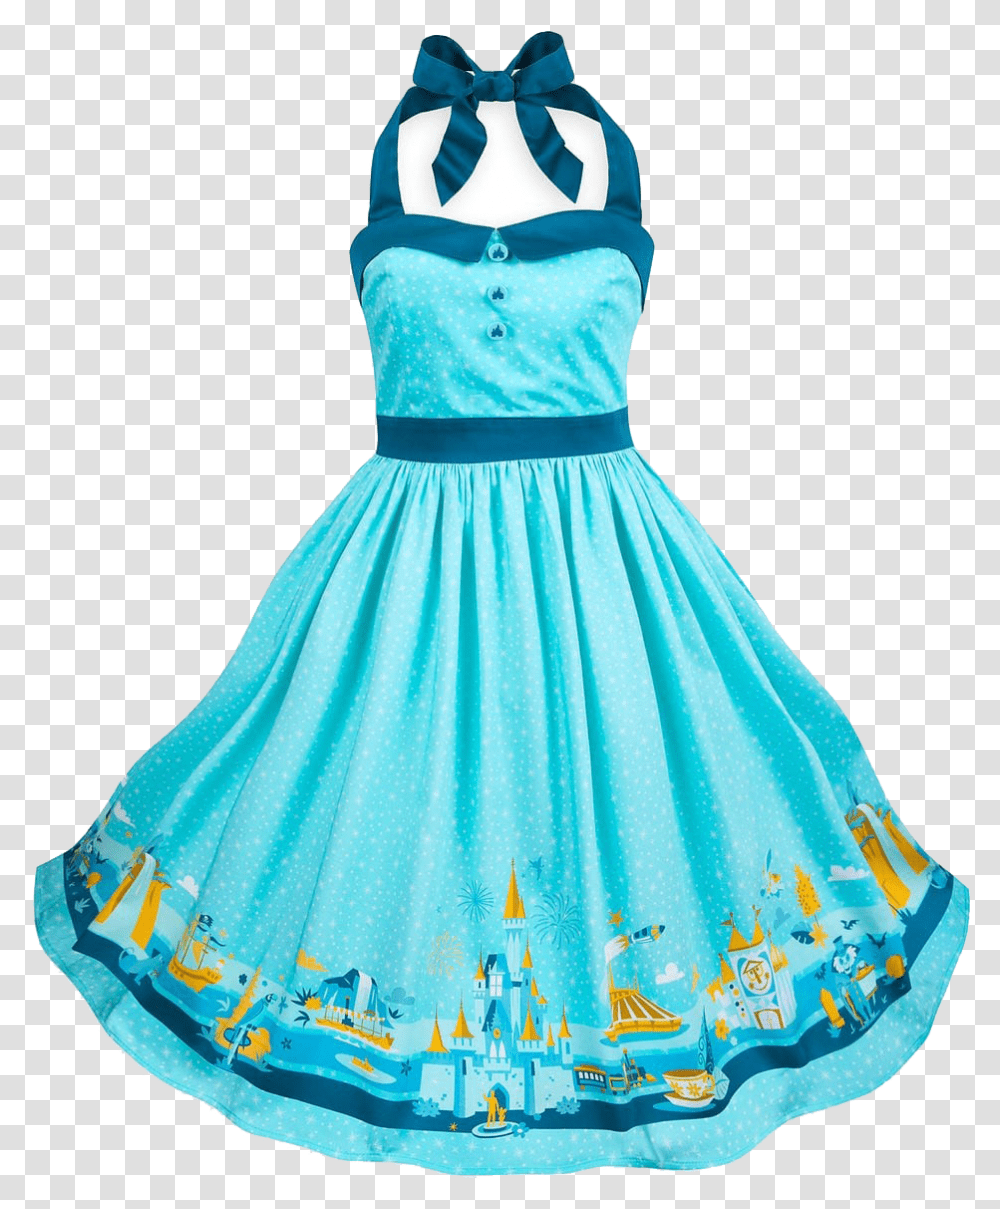 Dress Free Image Download Dress Shop Disneyland Dress, Apparel, Wedding Gown, Robe Transparent Png